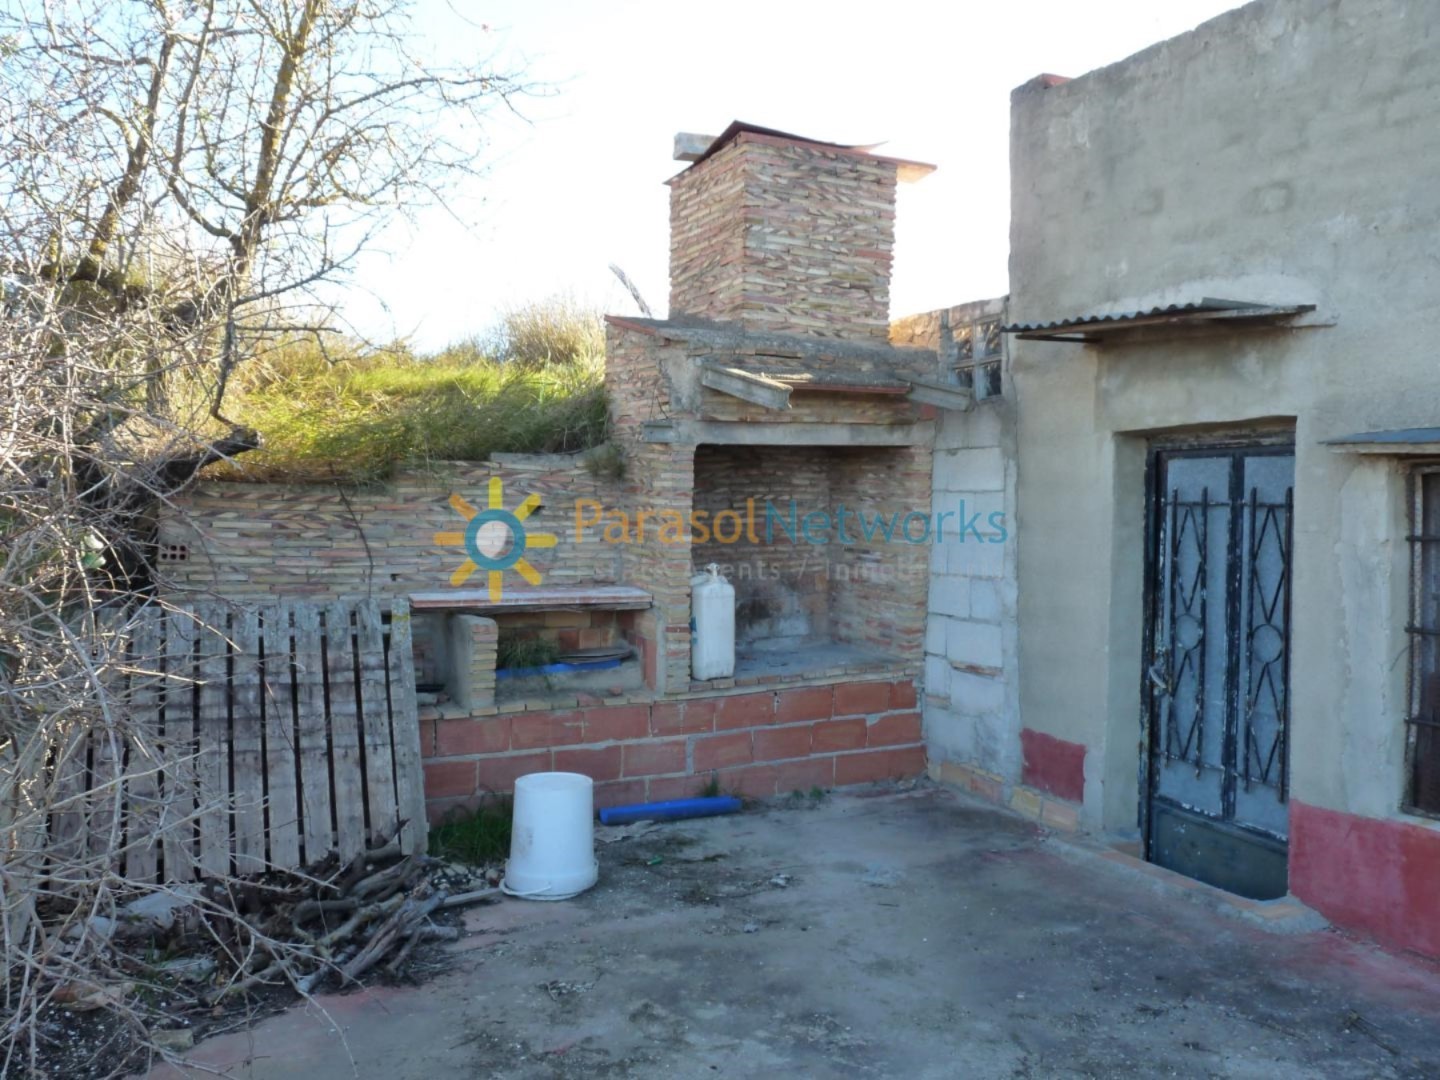 Plot for sale in Castellon de Rugat – Ref.231